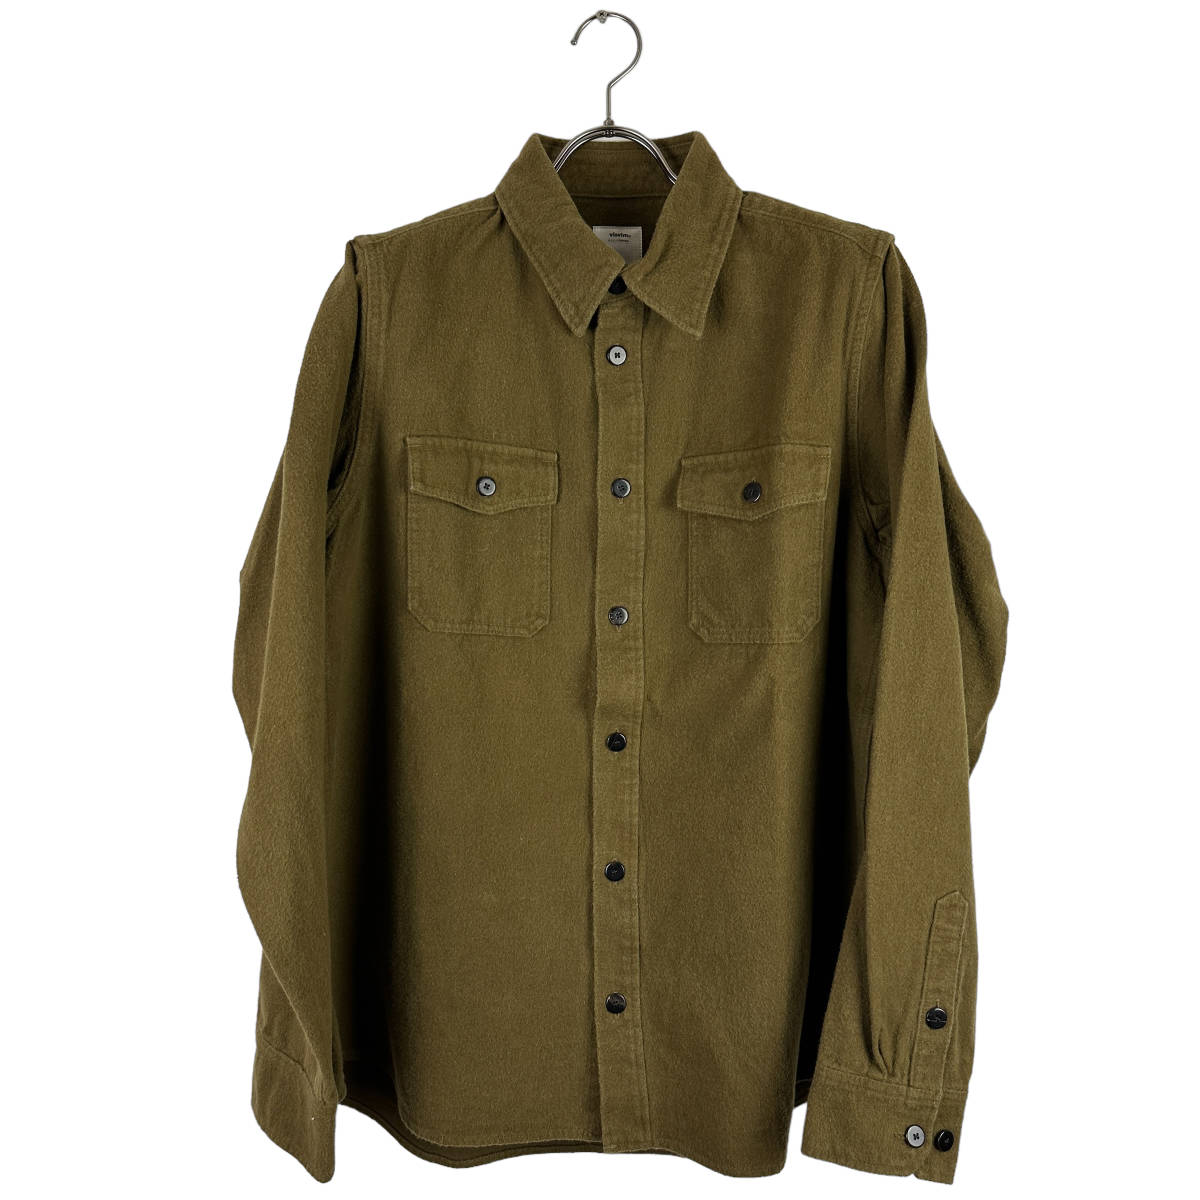 VISVIM(ビズビム) I.C.T ELK Flannel Shirt (khaki)